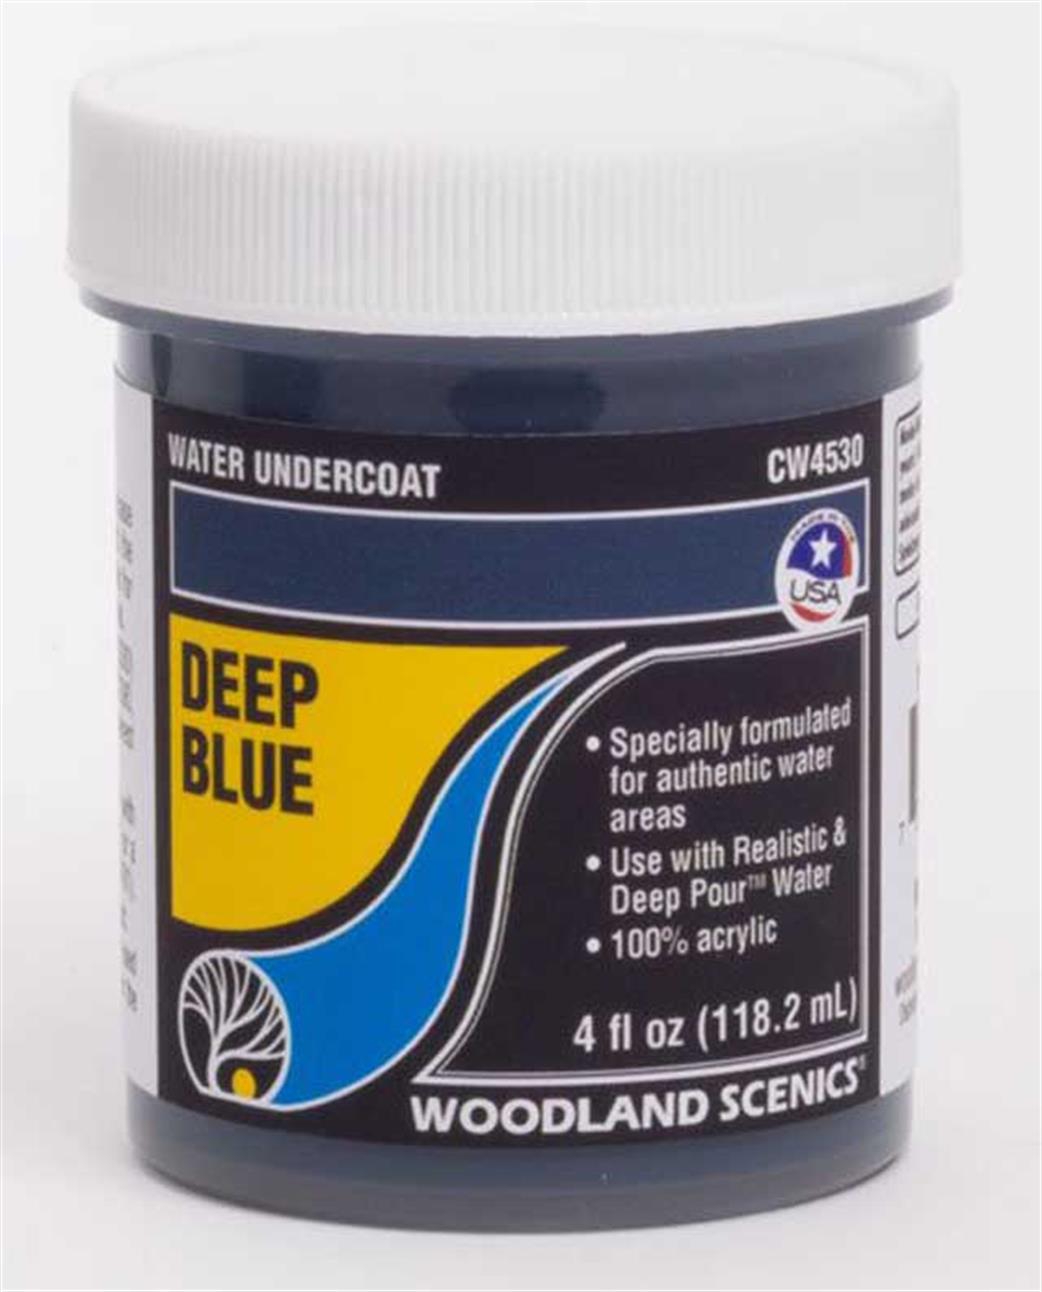 Woodland Scenics CW4530 Deep Blue Water Undercoat